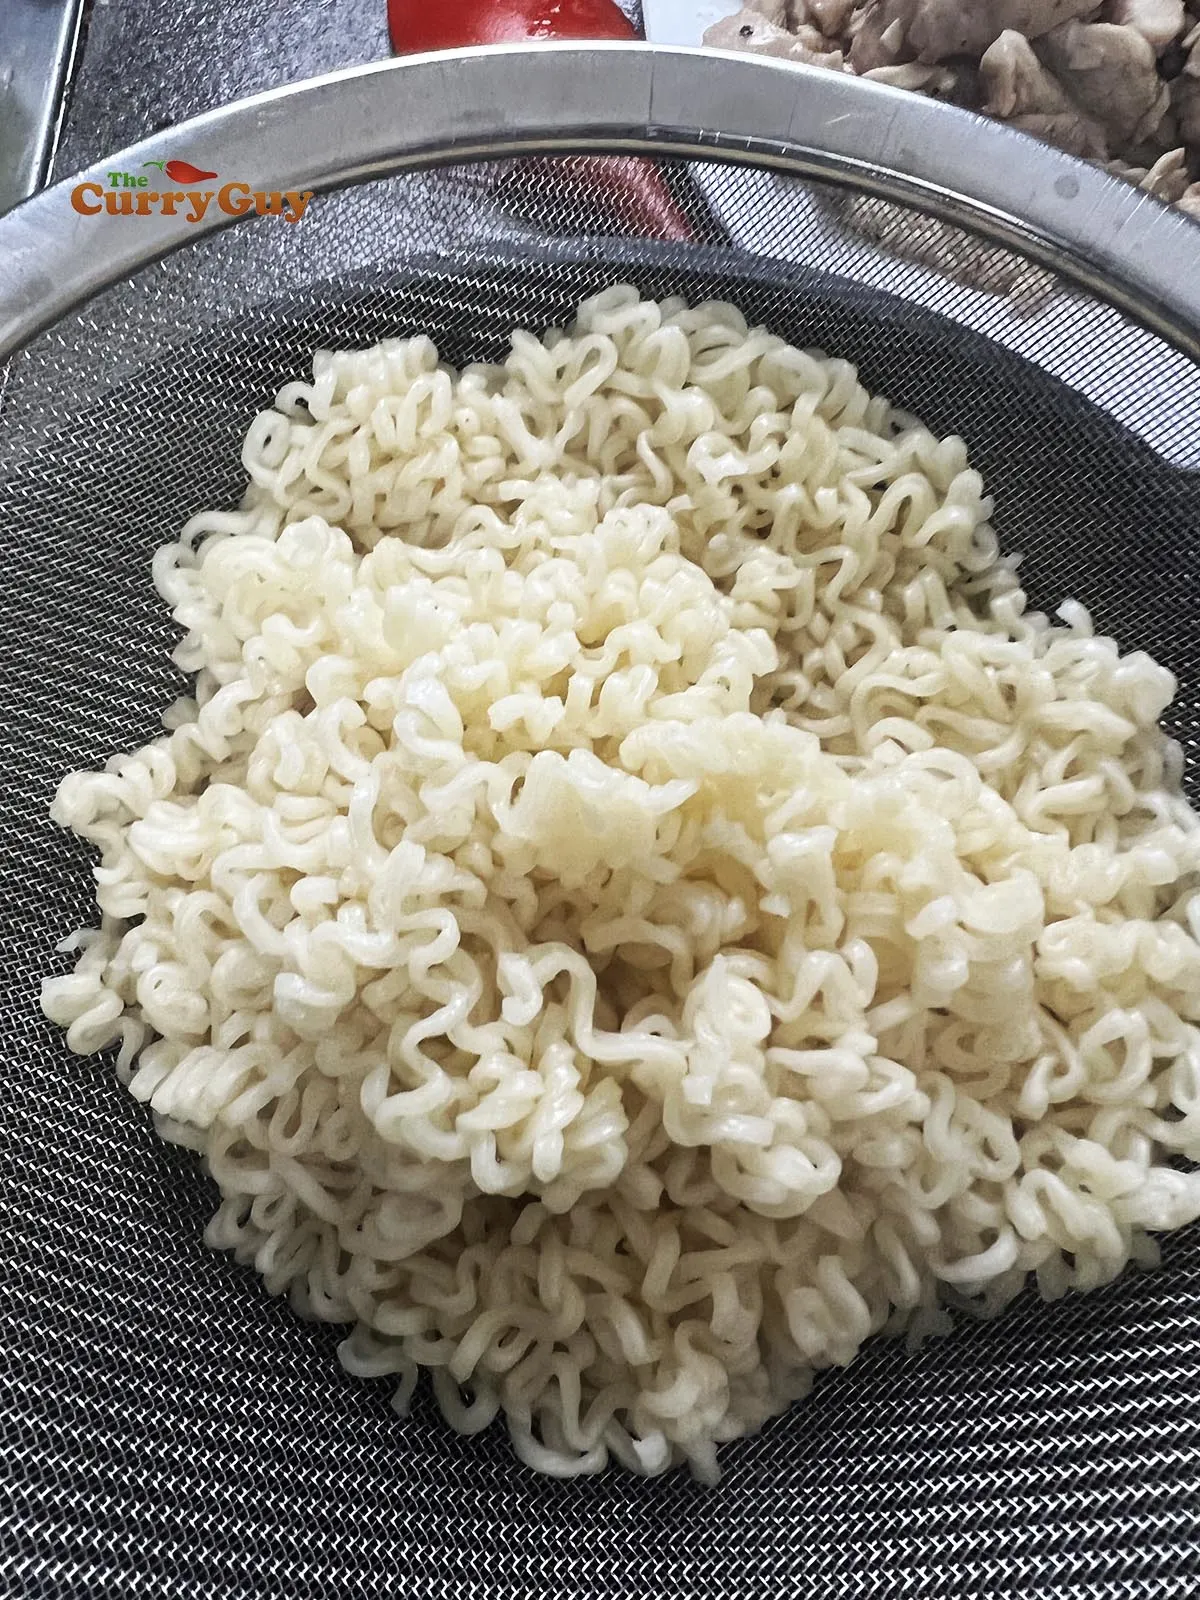 Cooked ramen noodles